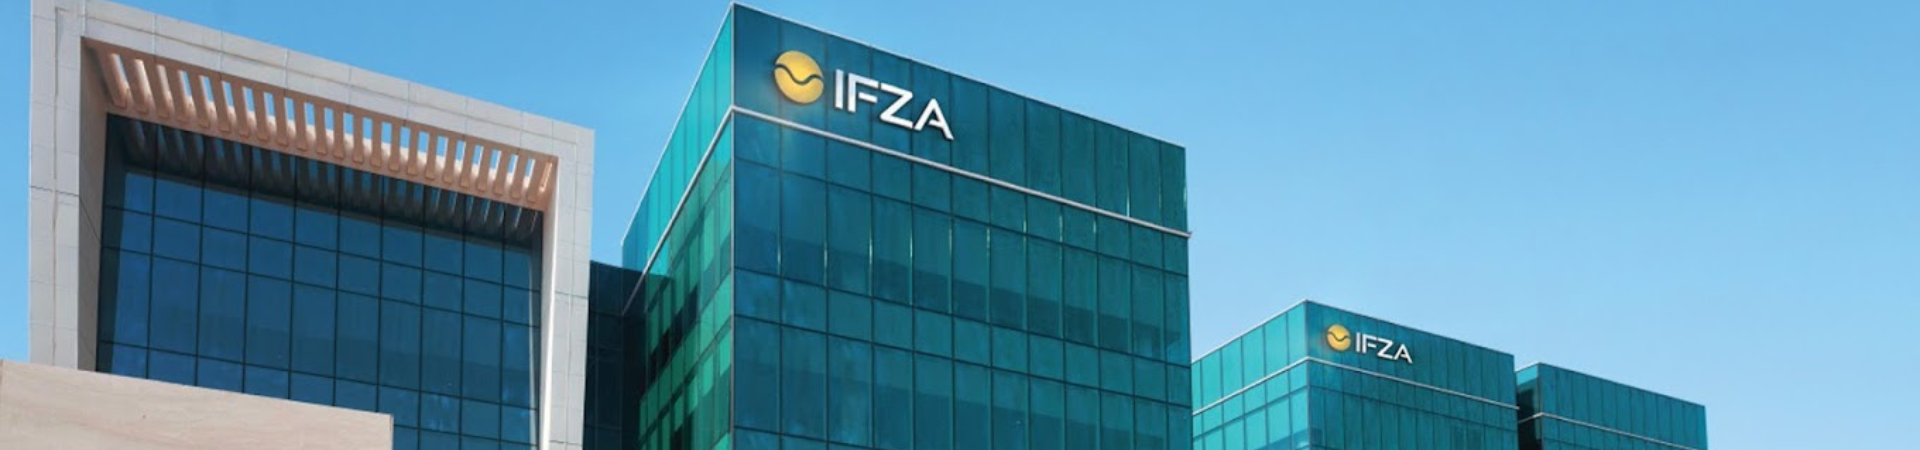 Top 5 Reasons Why You Should Setup An Ifza Free Zone Company